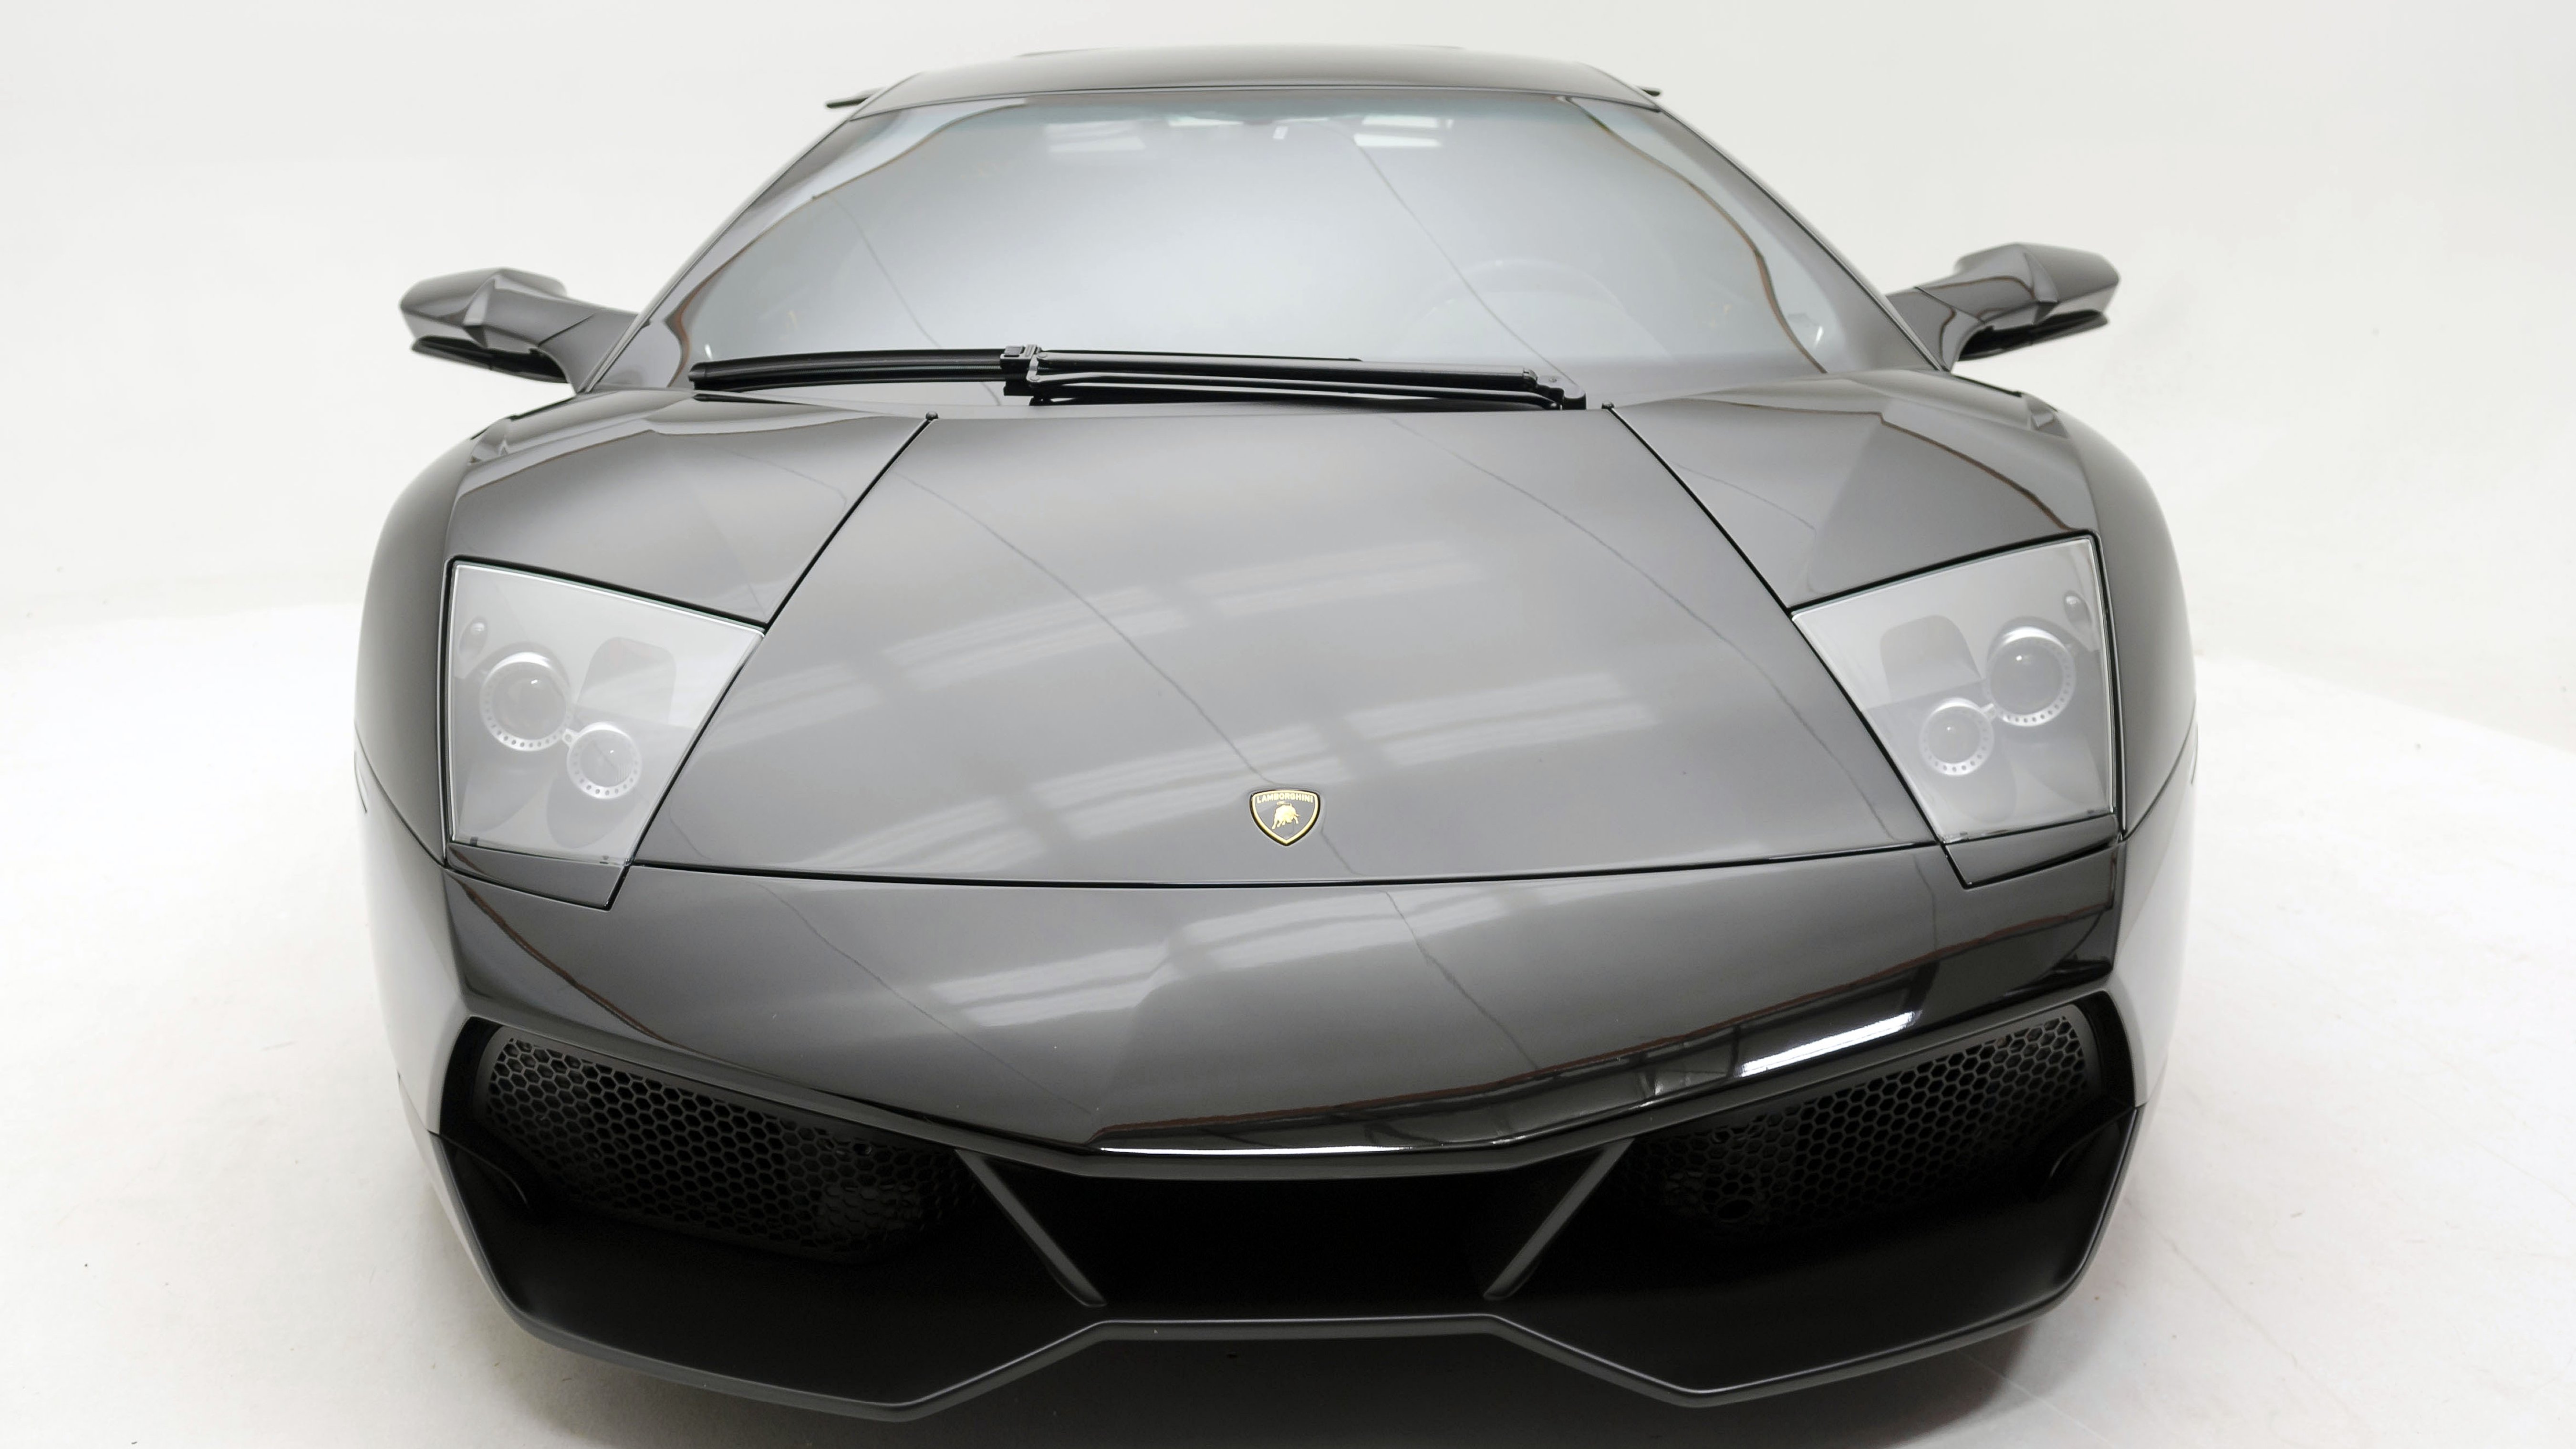 2010, Lamborghini, Murcielago, Sv, Supercar, Exotic, Italy,  03 Wallpaper